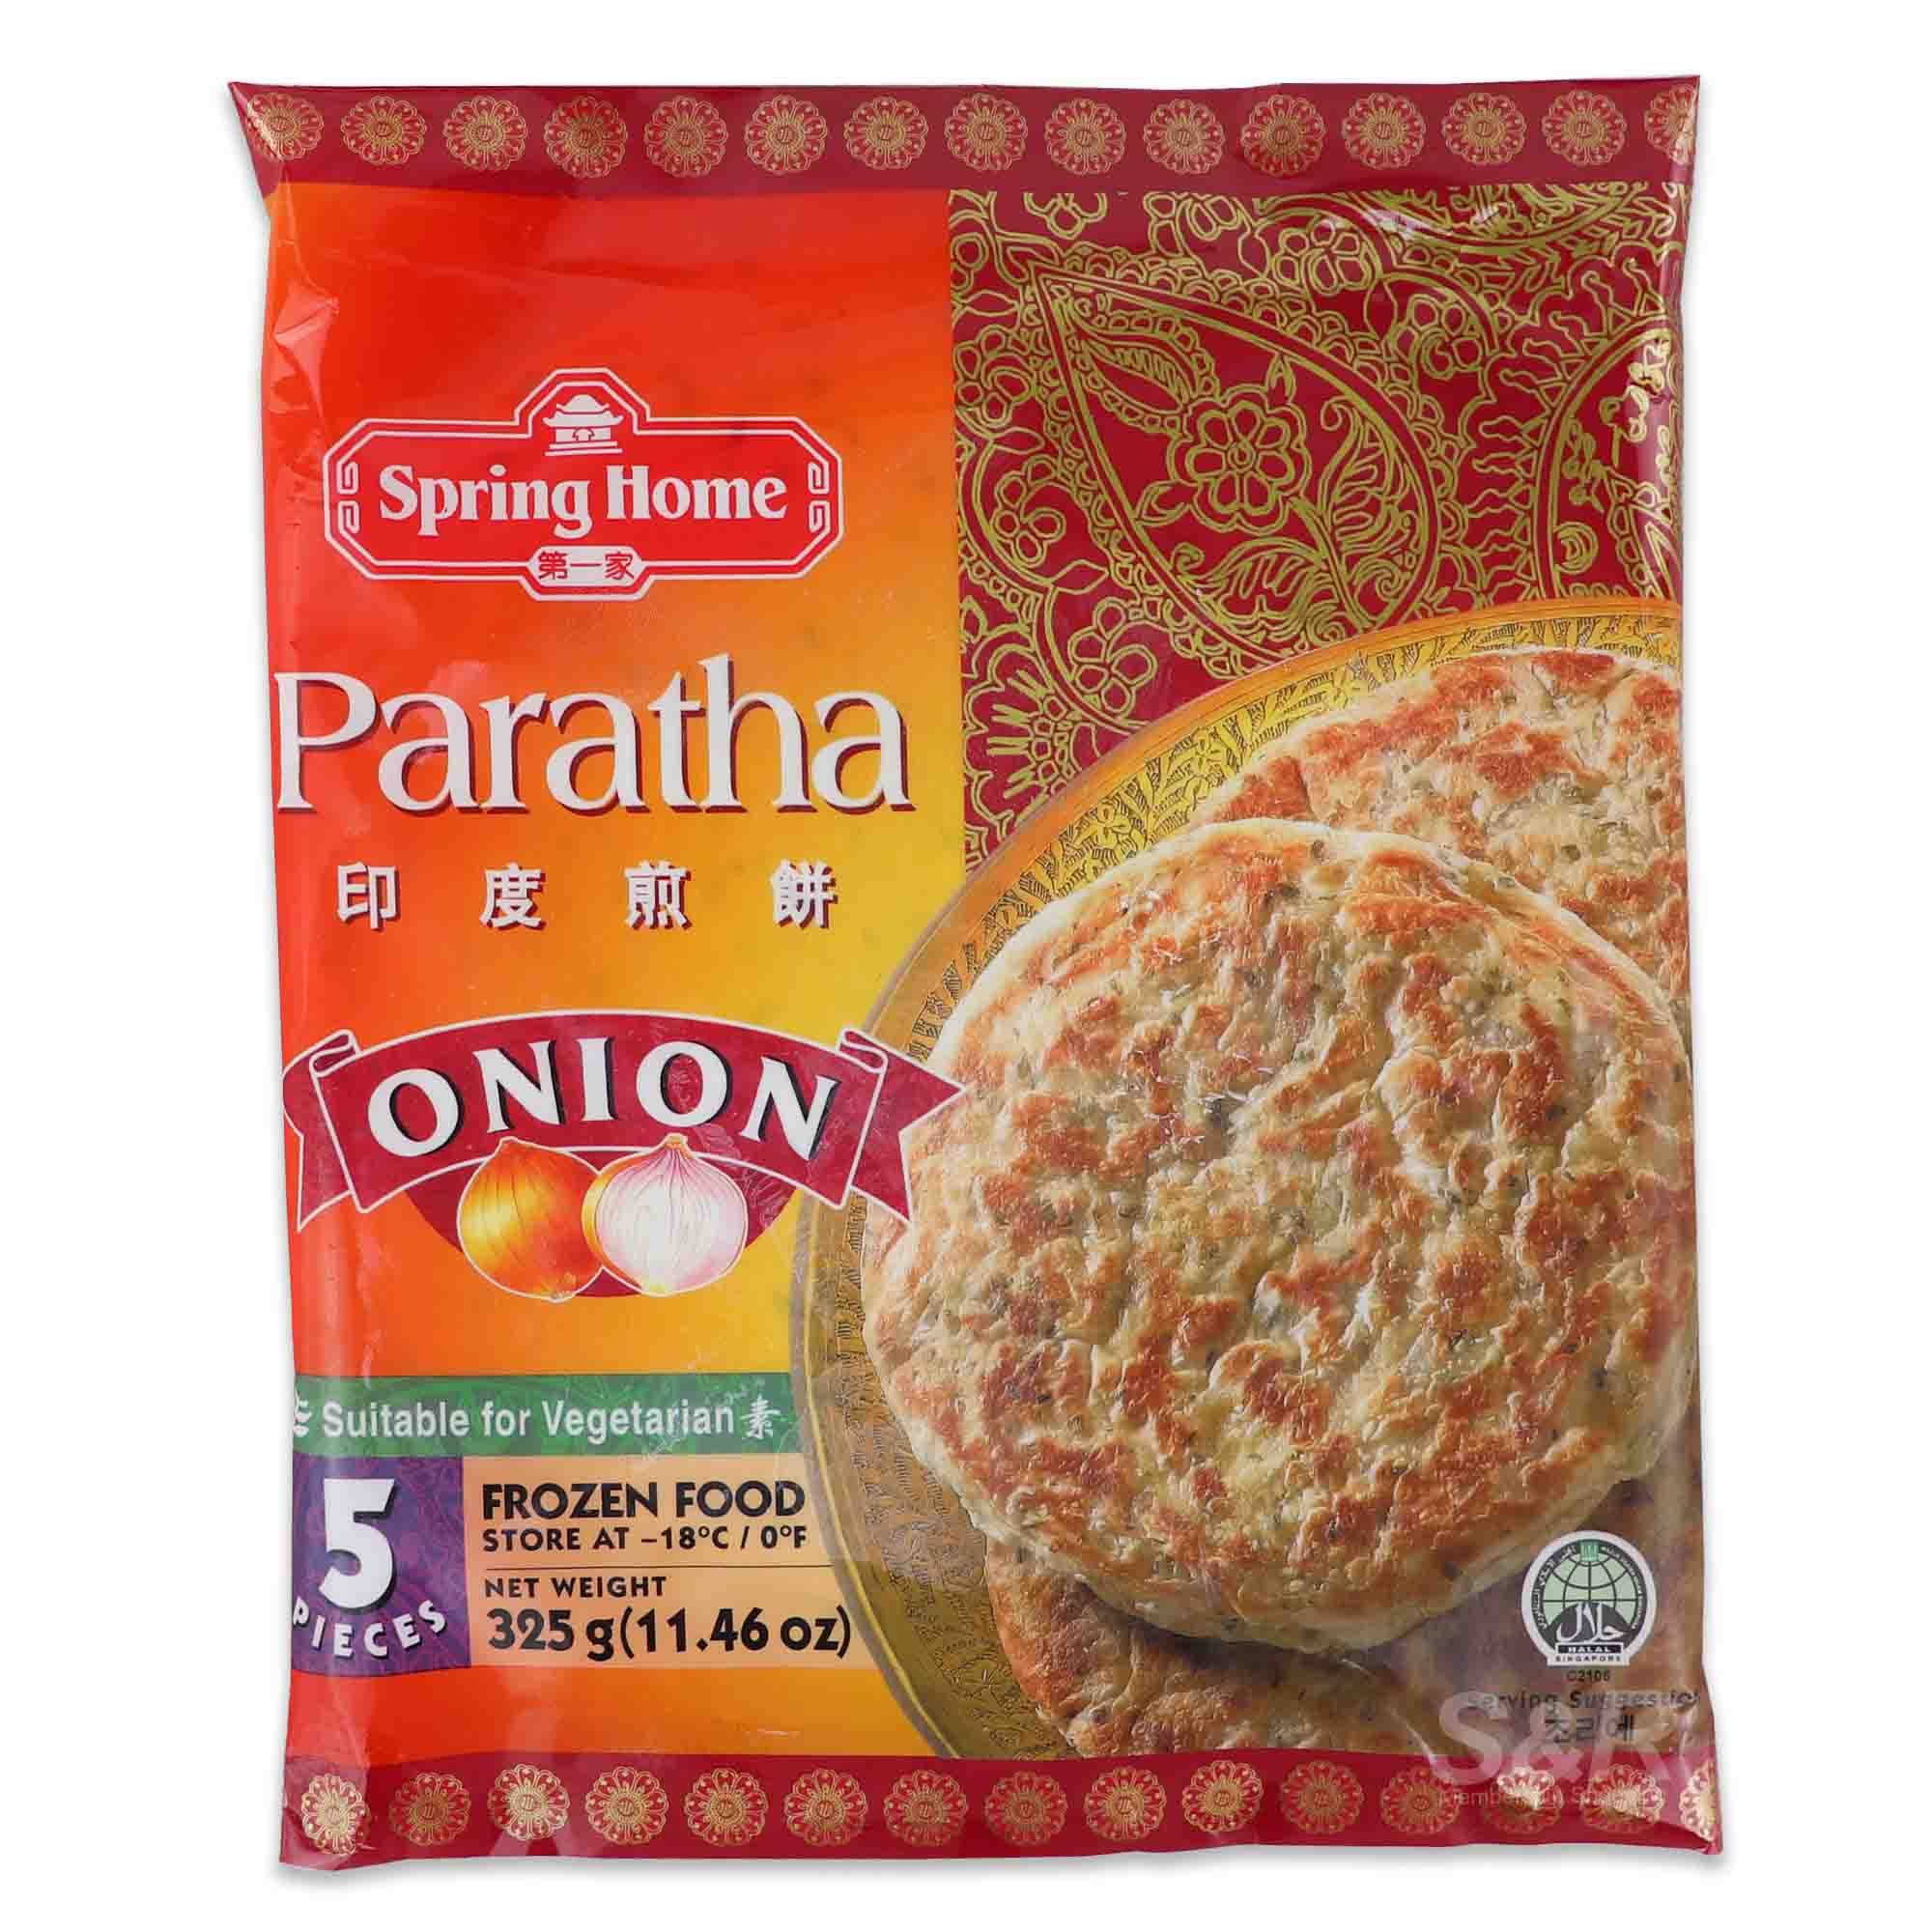 Spring Home Paratha Onion 5pcs